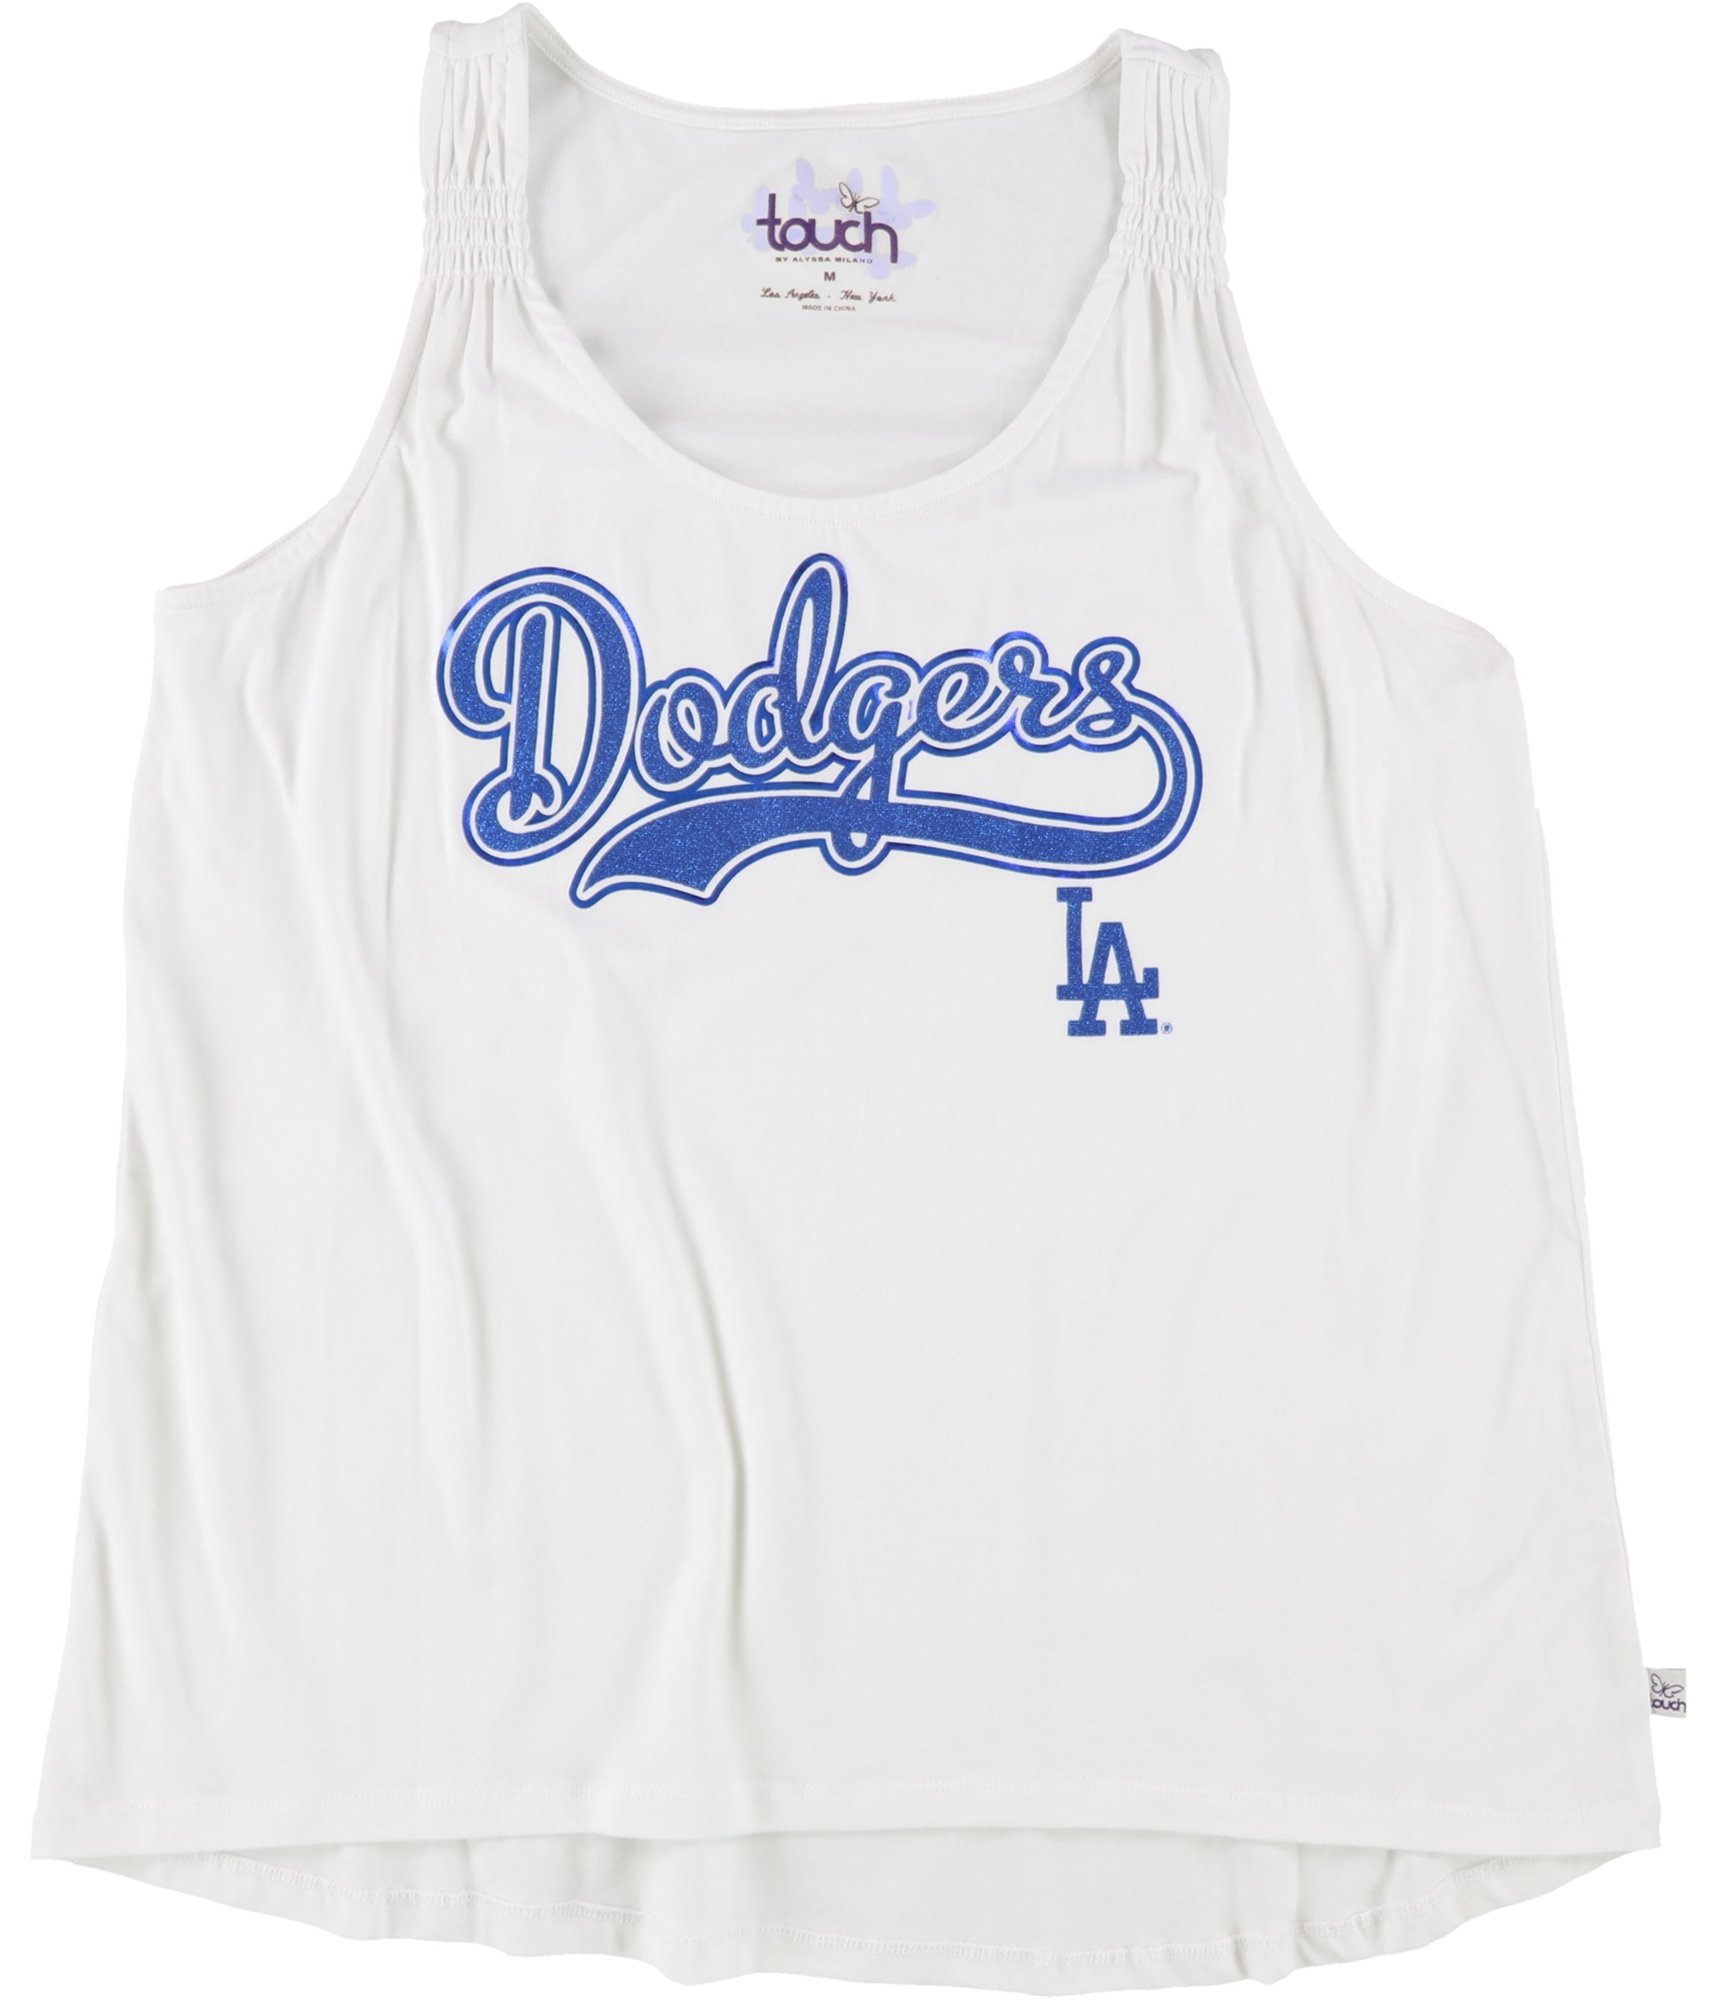 Buy a Womens Touch Dodgers Glitter Logo Tank Top Online